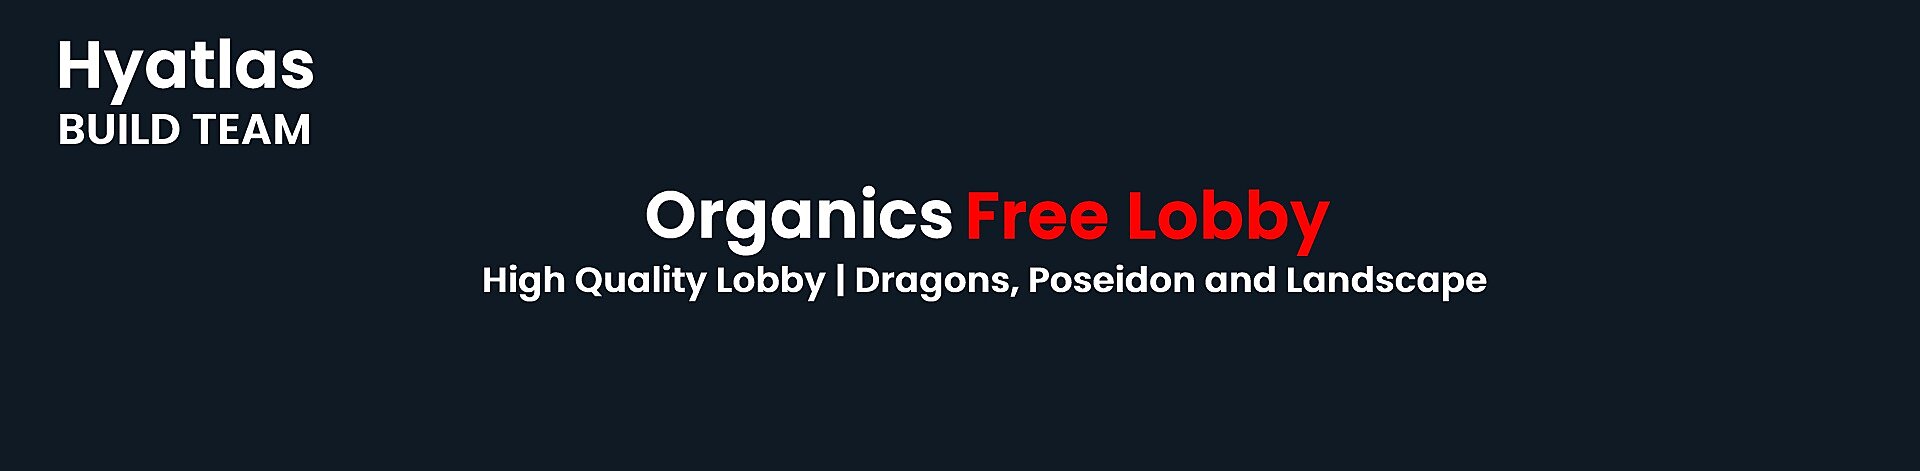 OrganicsFree Lobby-BannerHyatlas.jpg